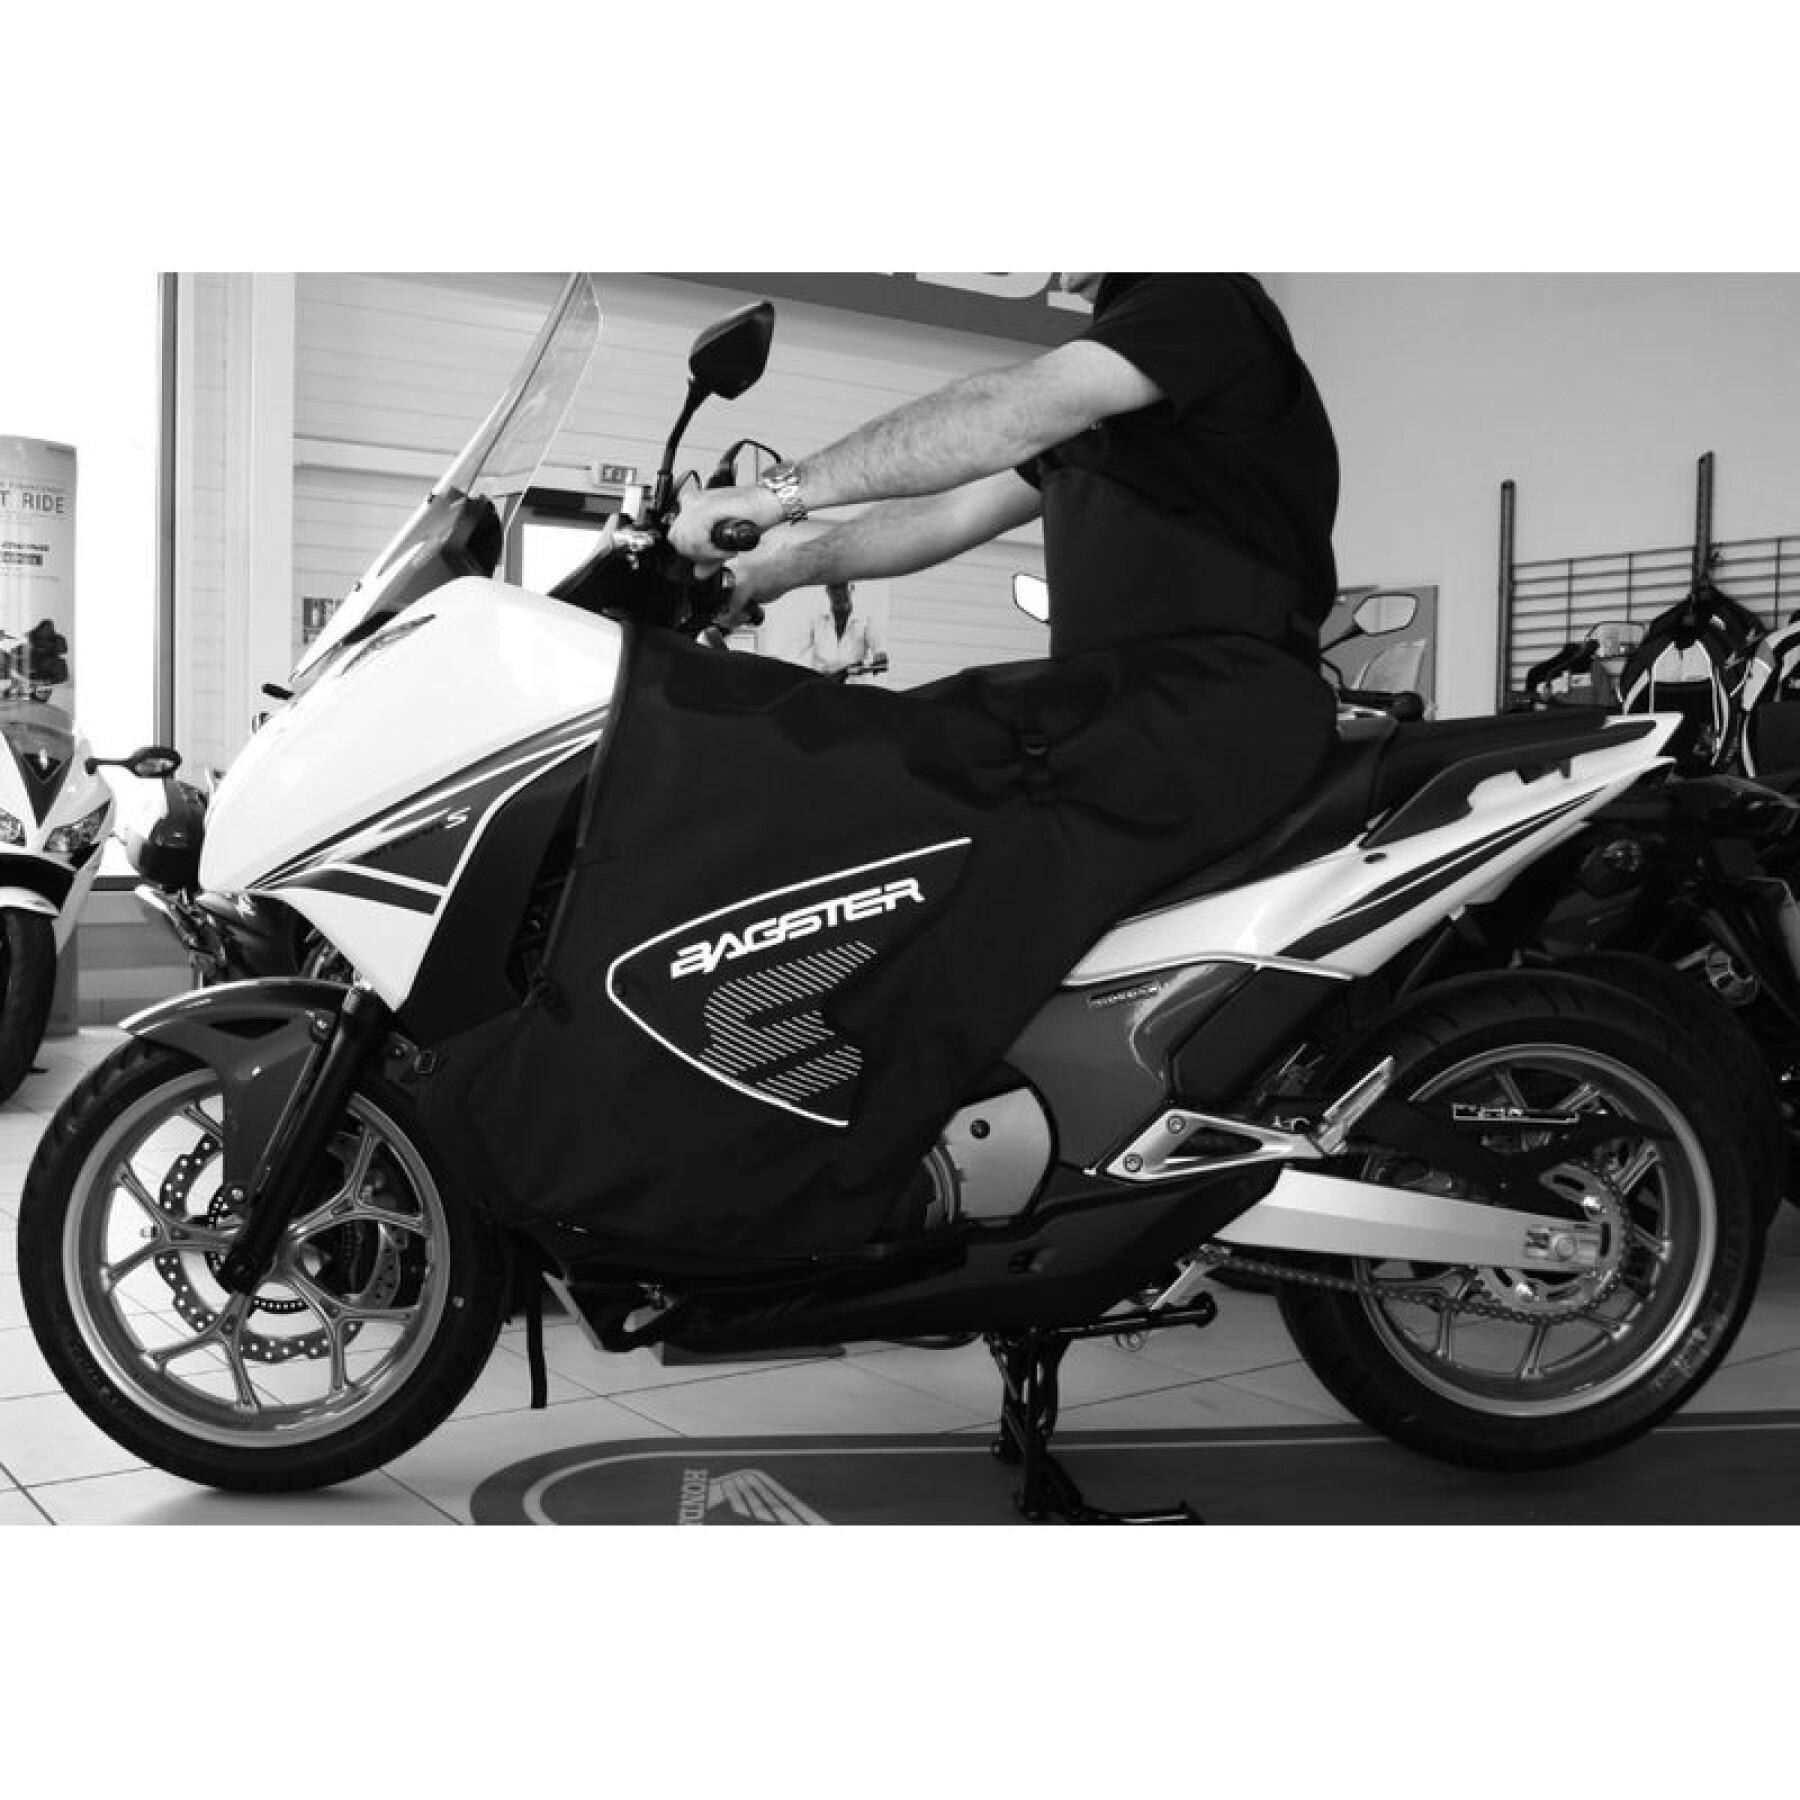 Cubrepiernas para scooters Bagster 2020 – Boomerang Honda Integra 750 2014